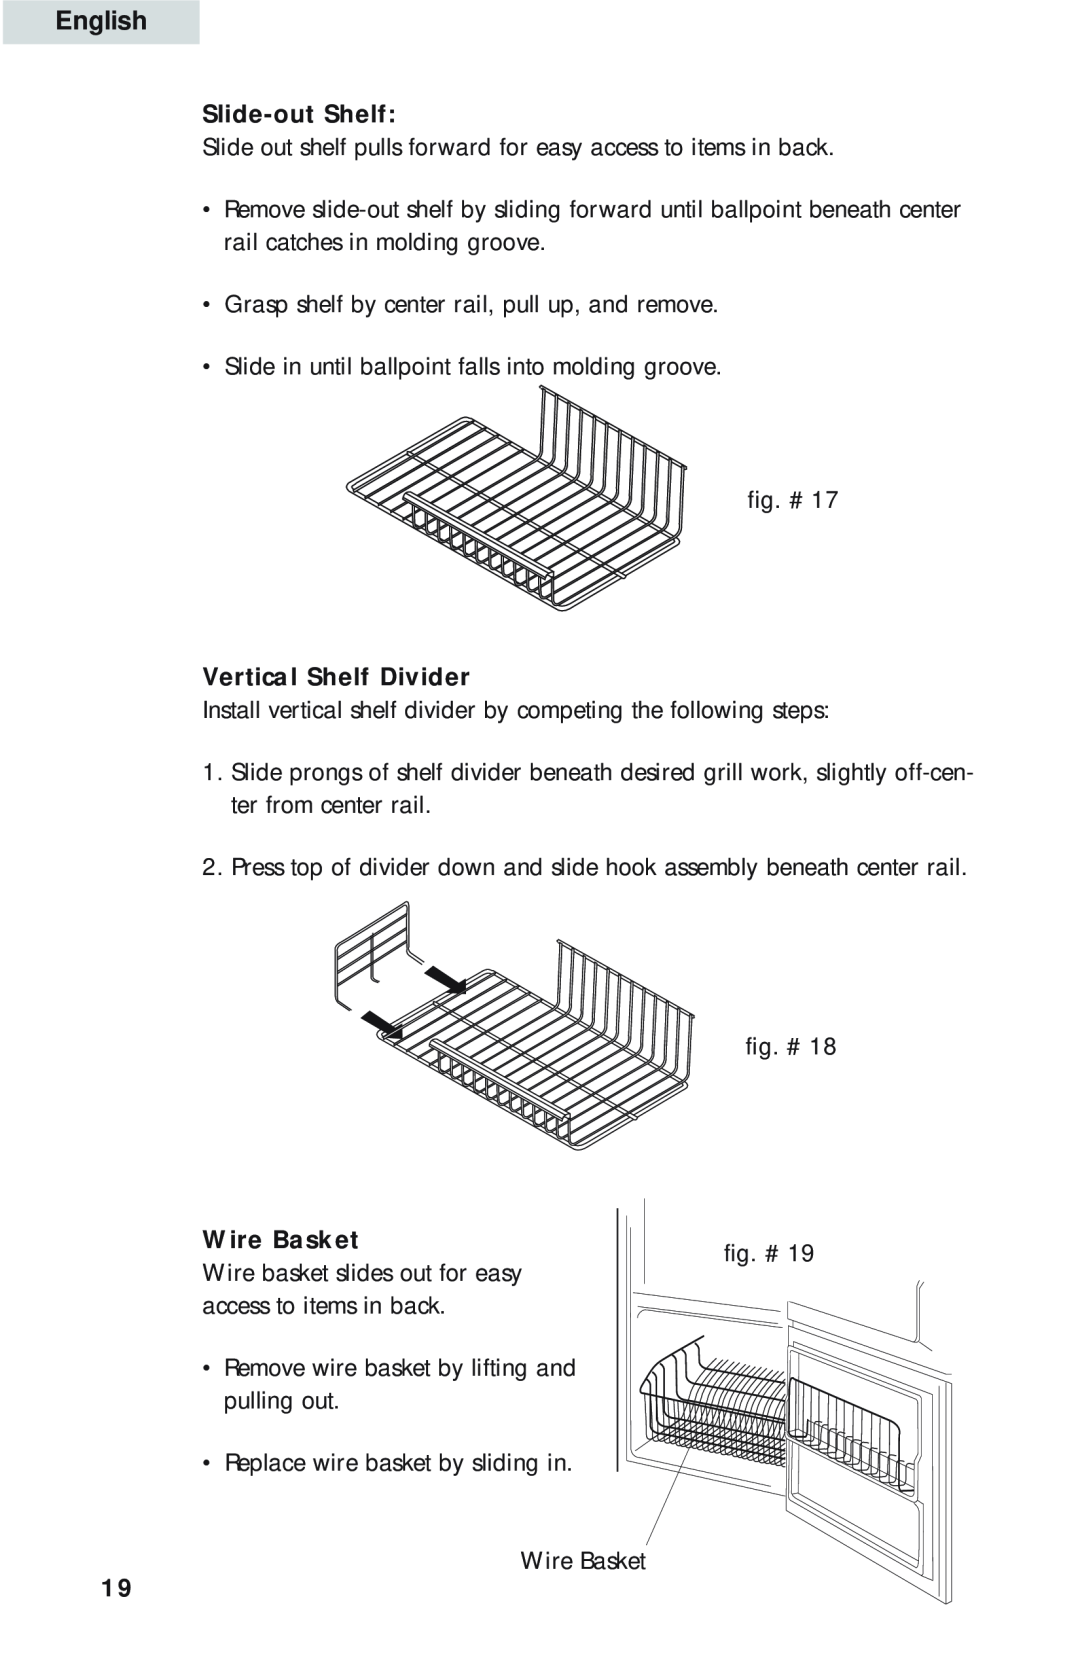 Haier HBE18, HBQ18, HBP18 user manual English, Slide-out Shelf, Vertical Shelf Divider, Wire Basket 